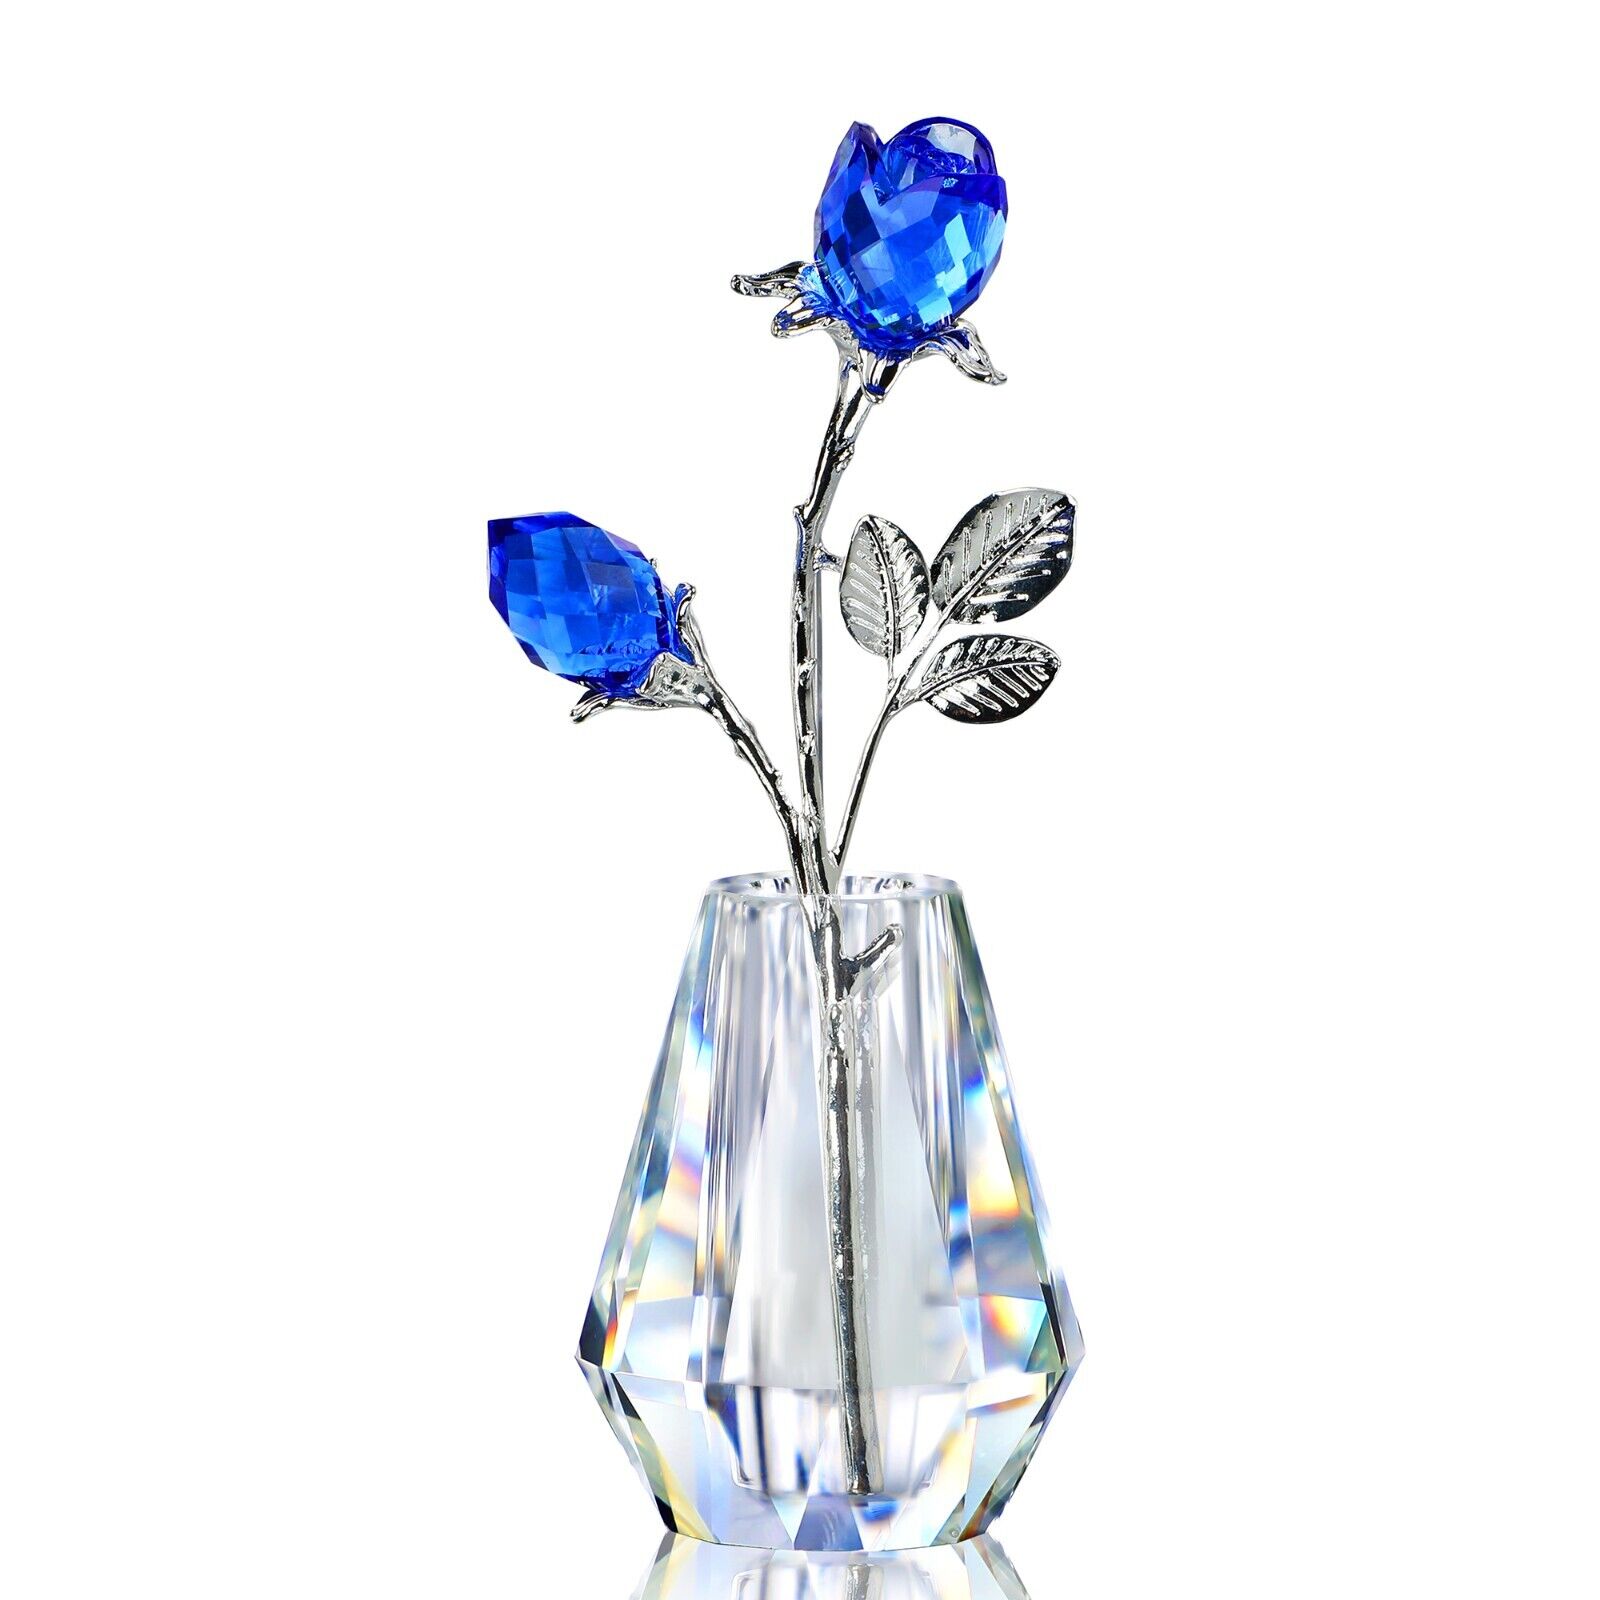 Blue Crystals Roses in Vase with Sliver Metal Stem Glass Figurine Ornament